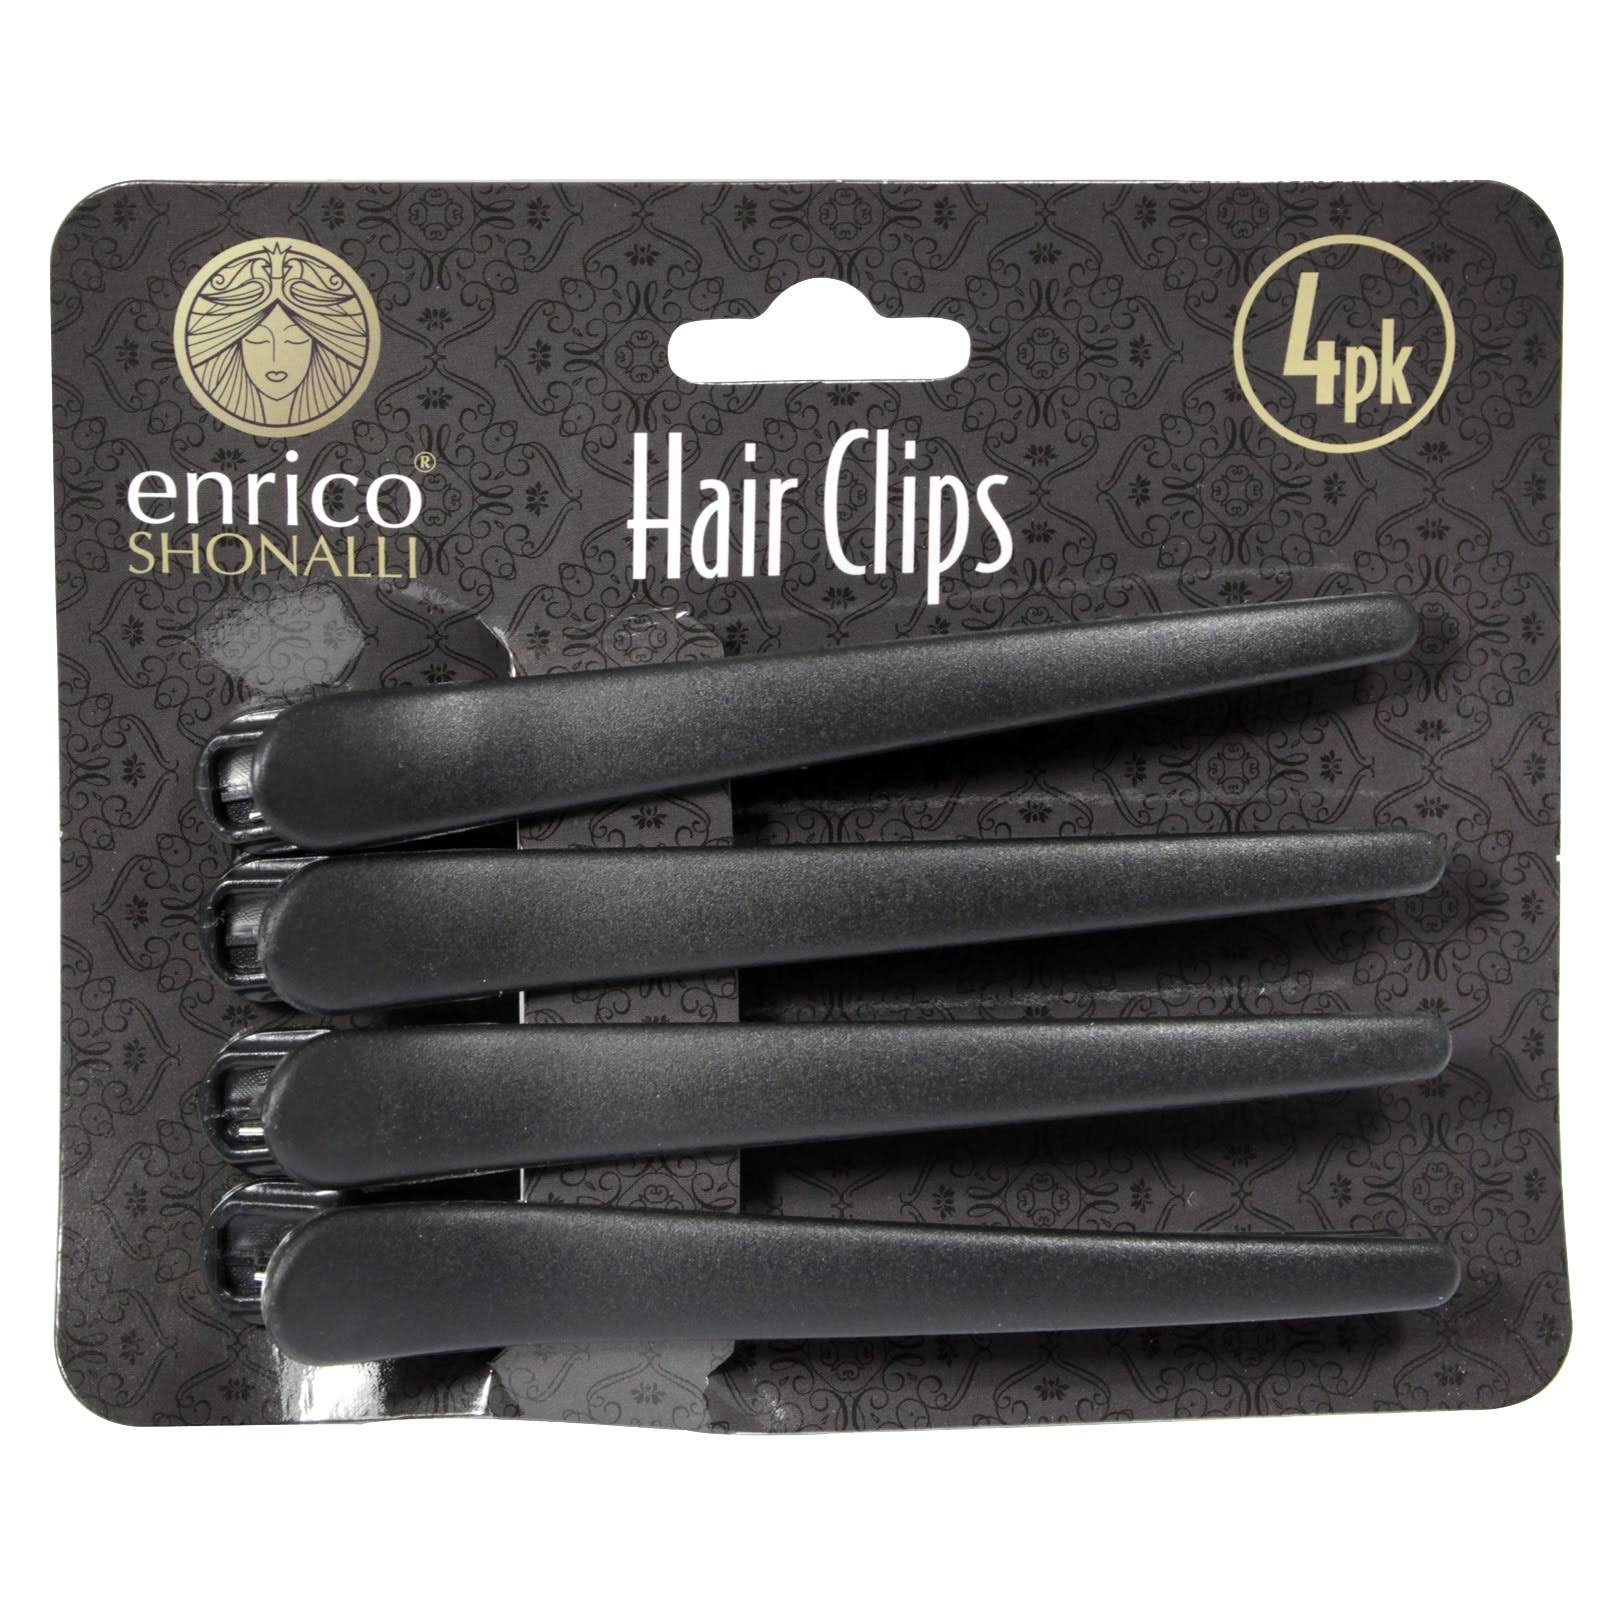 Enrico Black Long Hair Clips 4pk